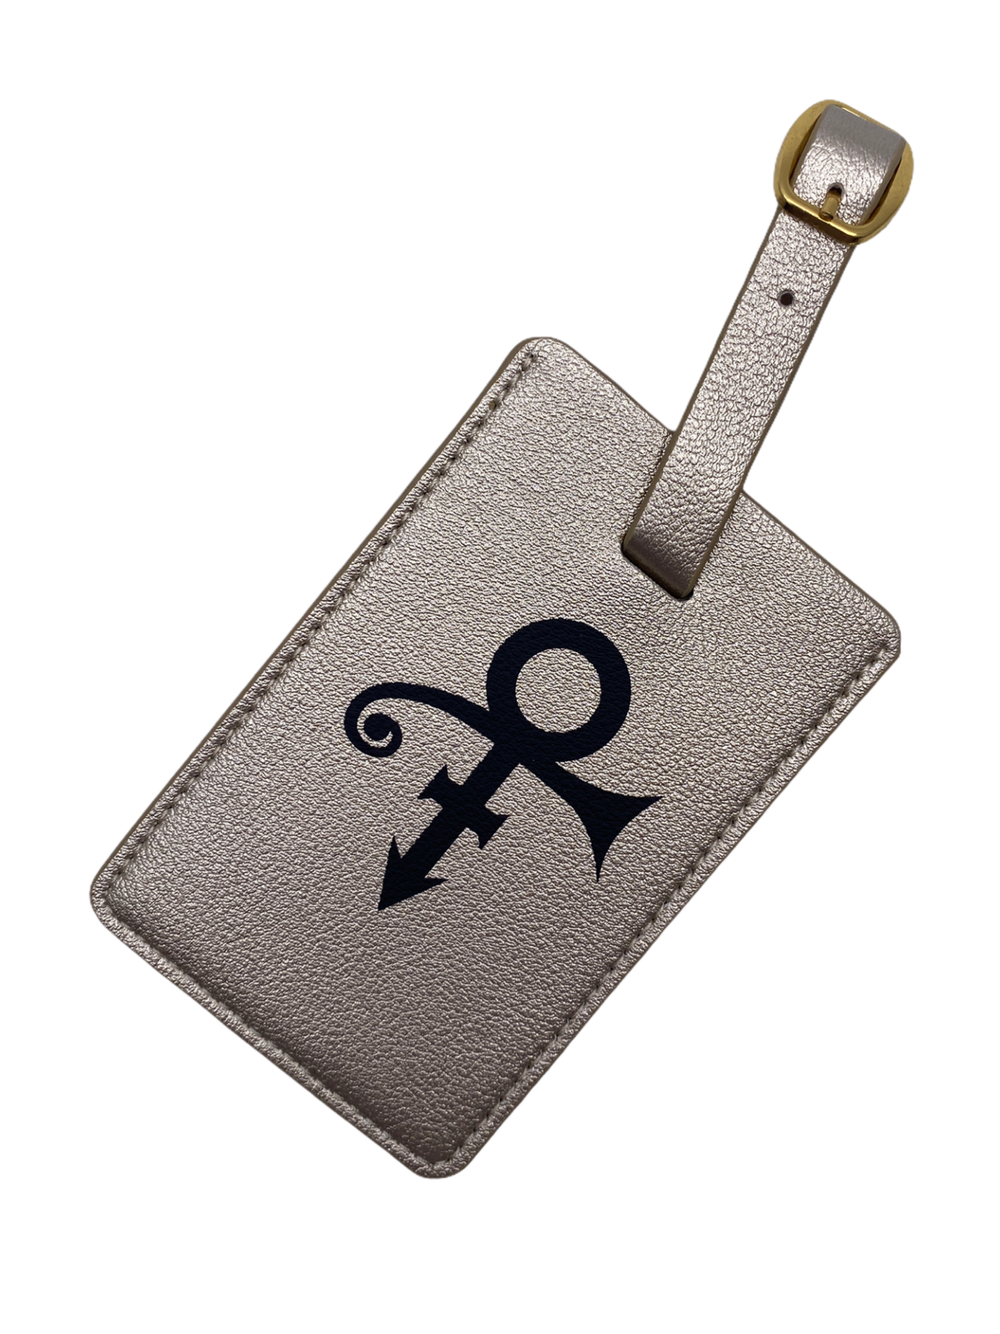 Prince Gold Luggage Tag Love Symbol Adjustable Brand New